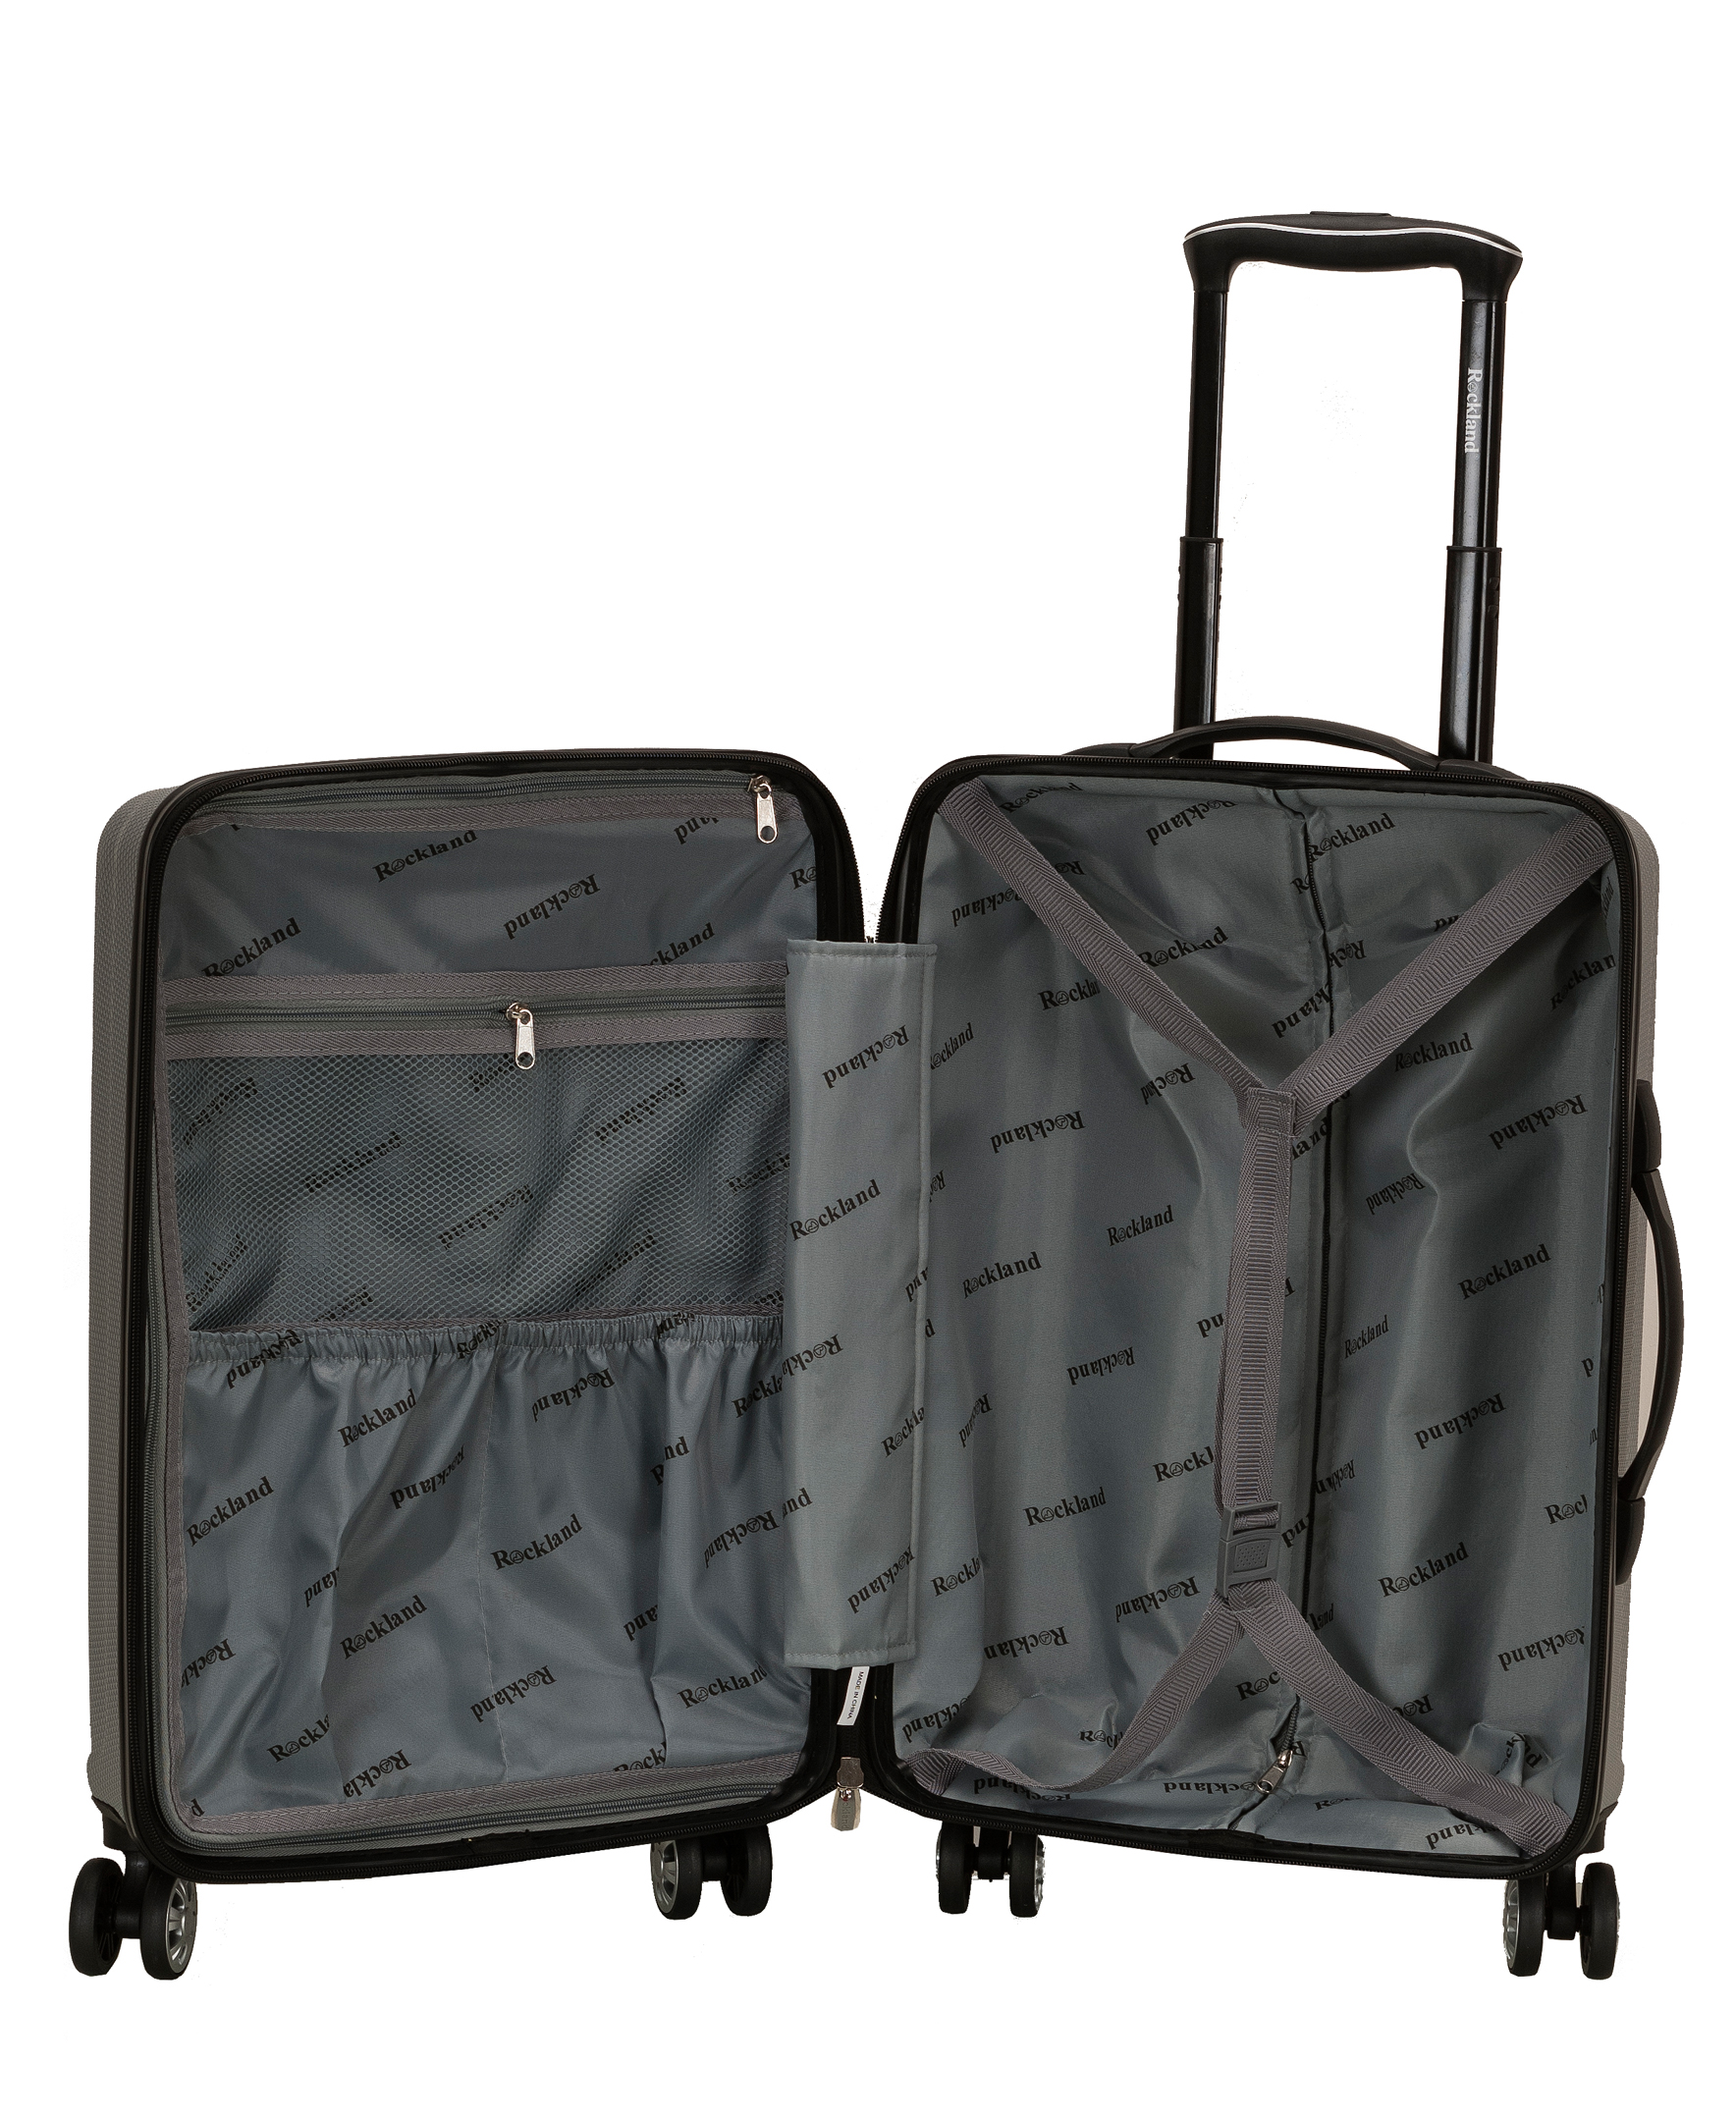 Rockland Luggage Skyline 3 Piece Hardside ABS Non-Expandable Luggage Set, F240 - image 4 of 8